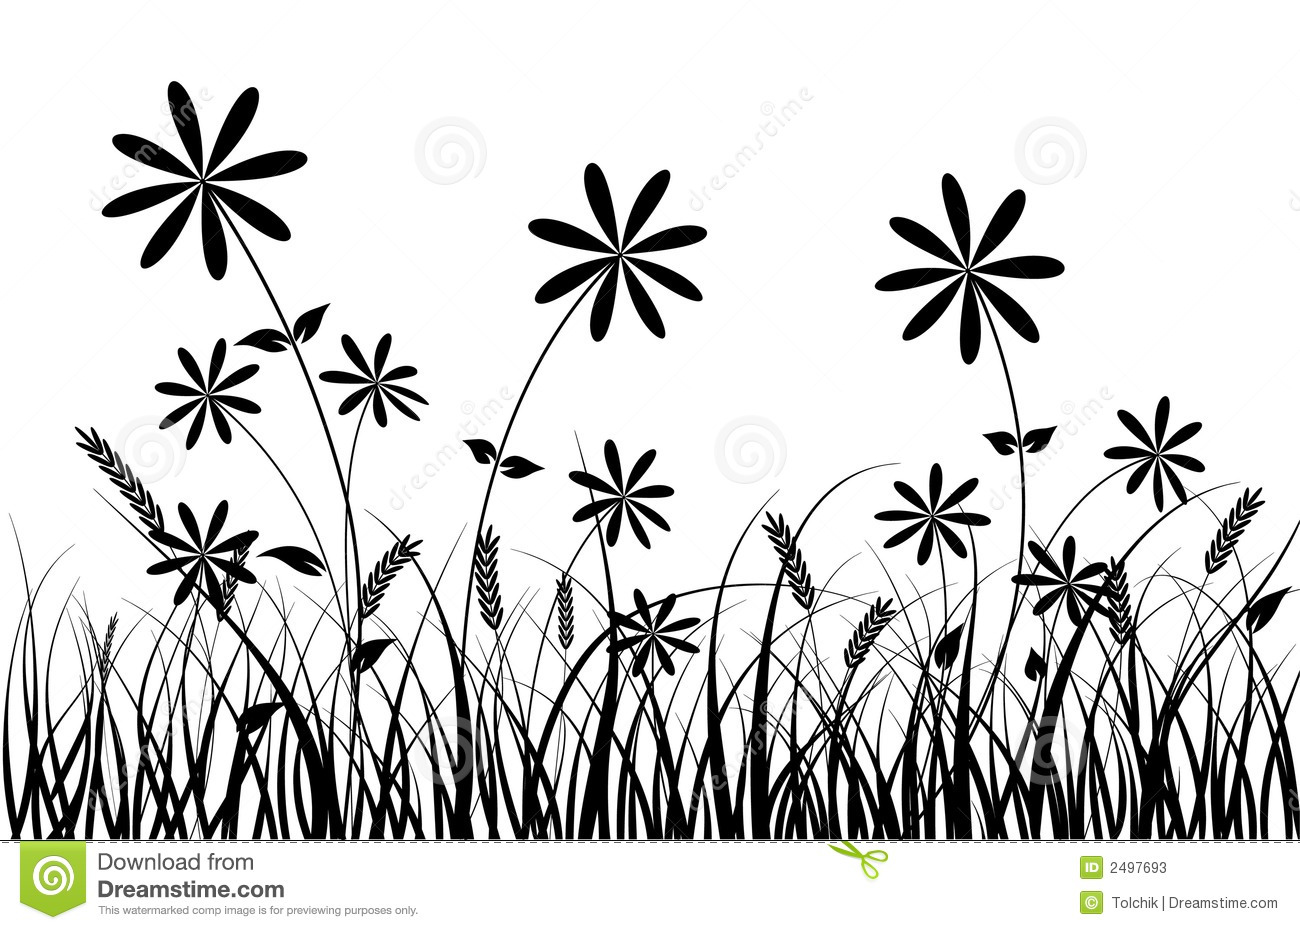 Grass and Flowers Clip Art